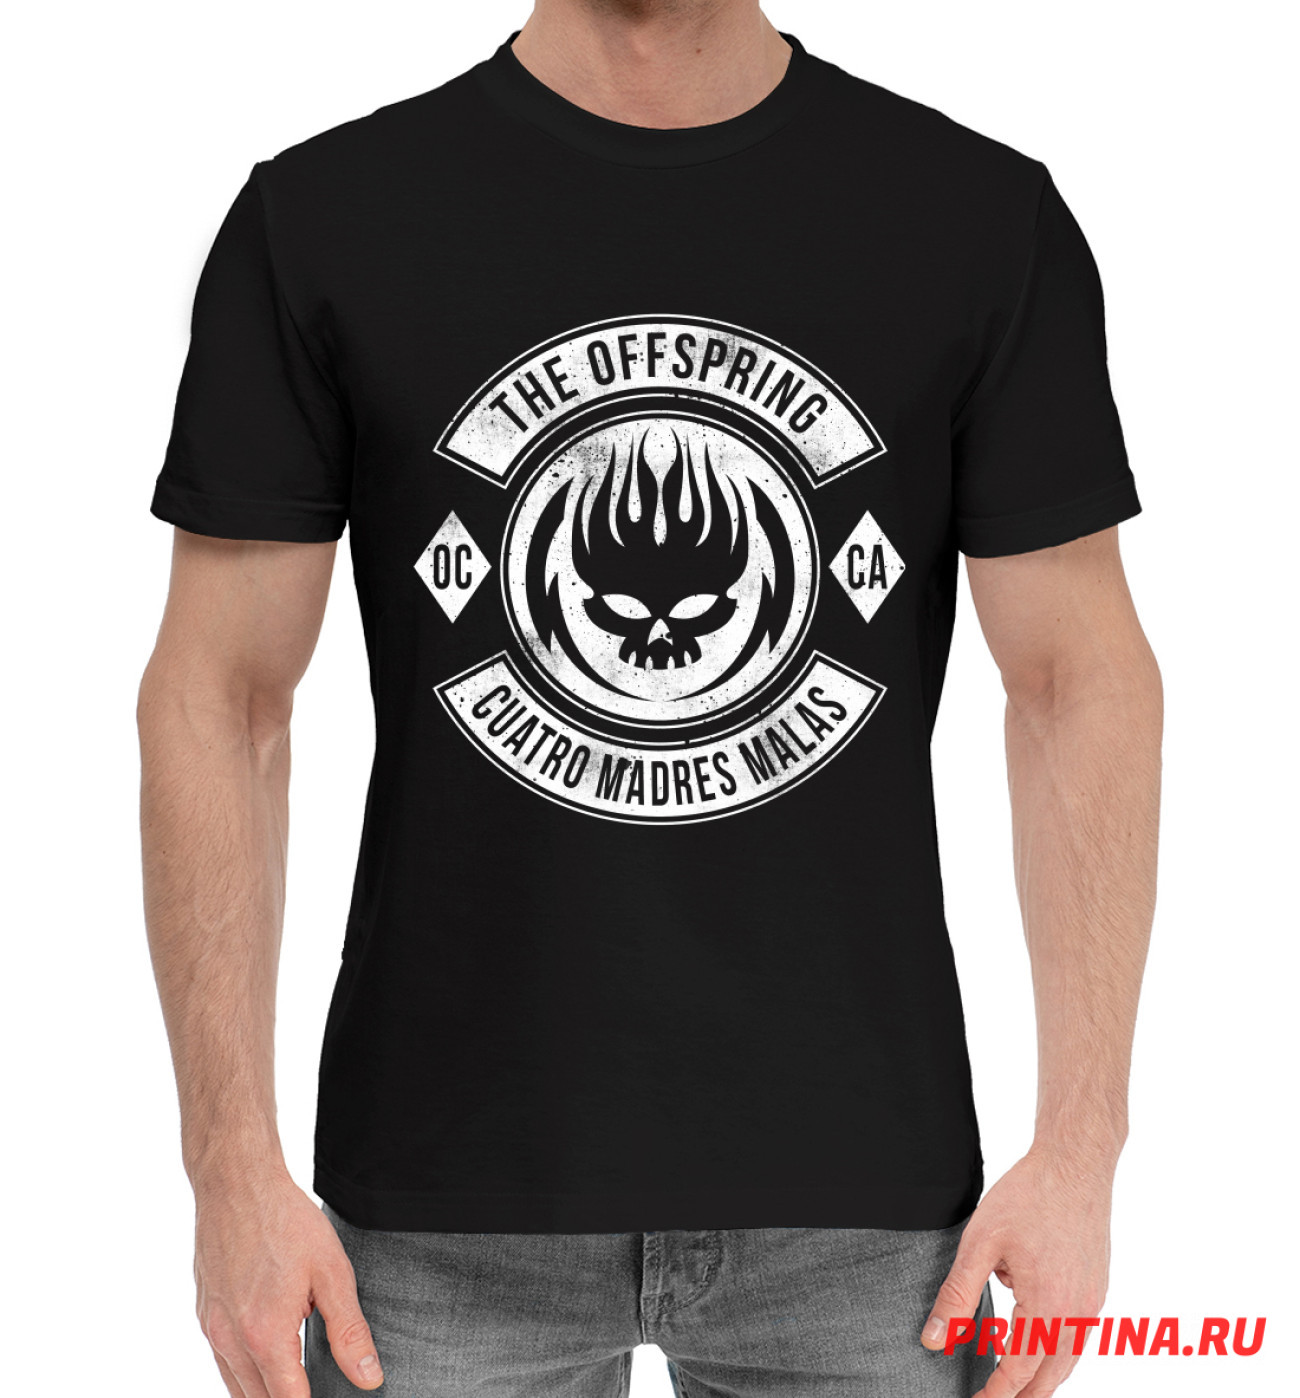 Мужская Хлопковая футболка Offspring, артикул: OFS-569449-hfu-2